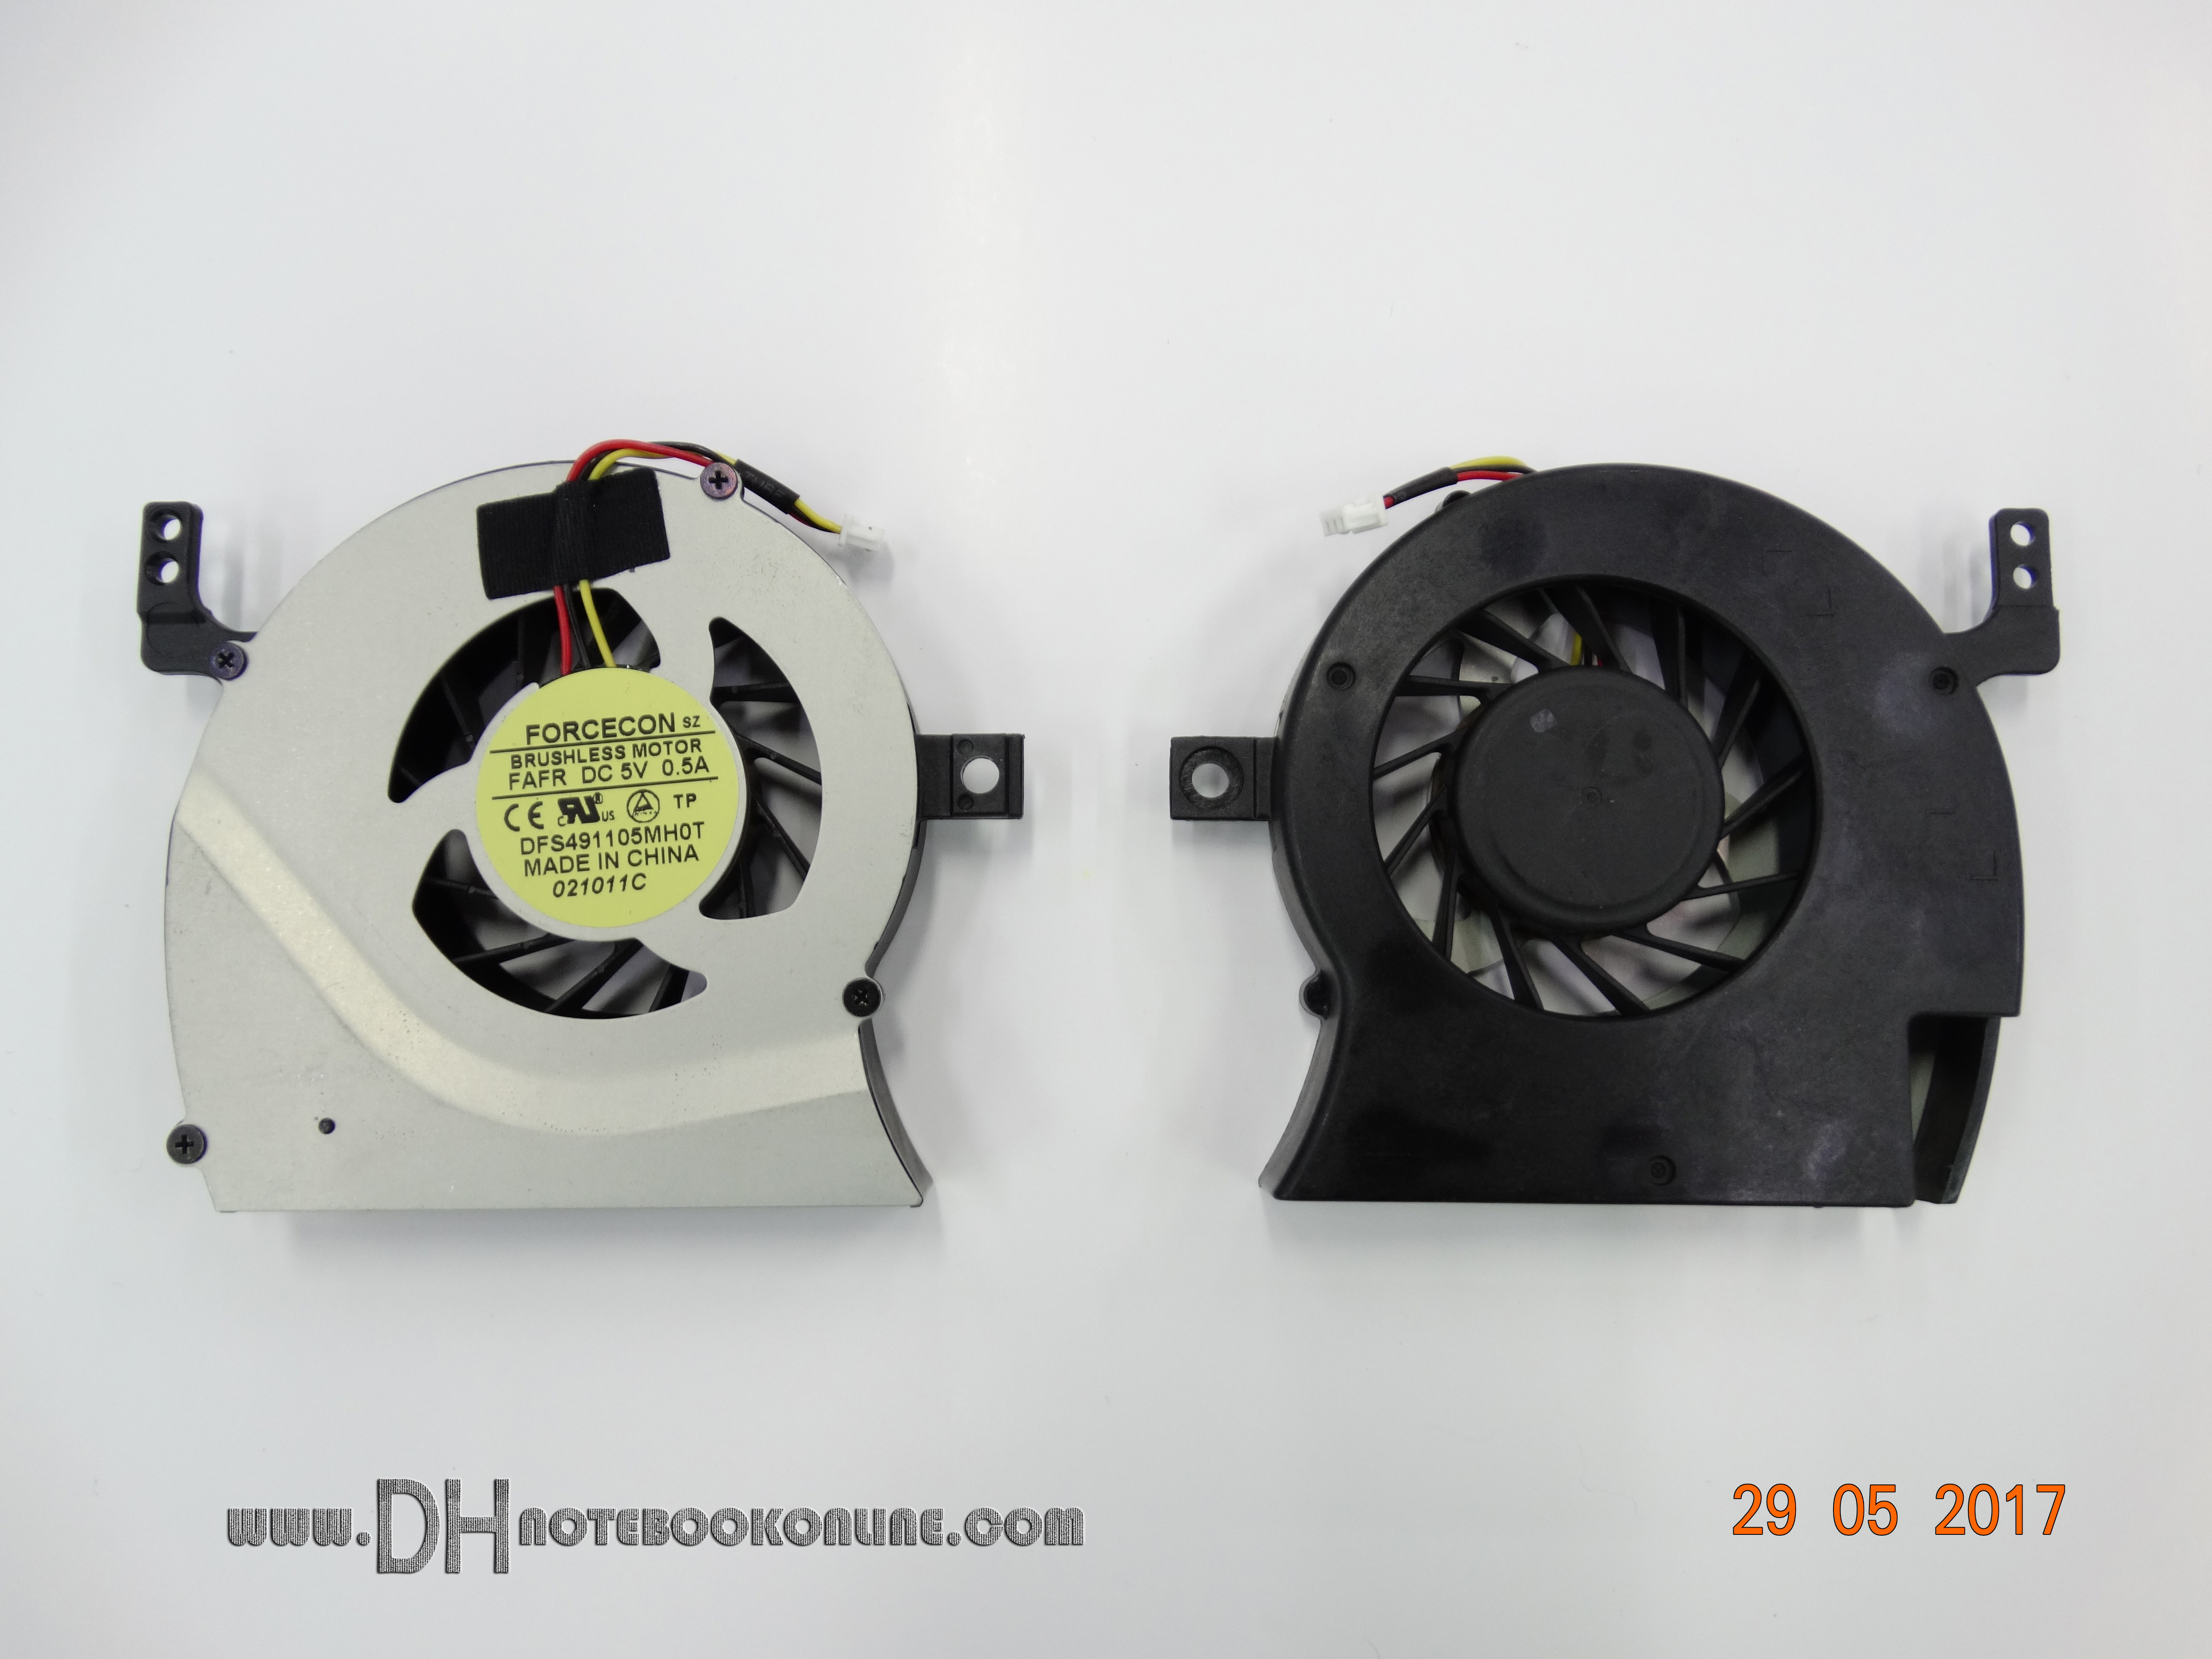 Toshiba L645 Cooling Fan